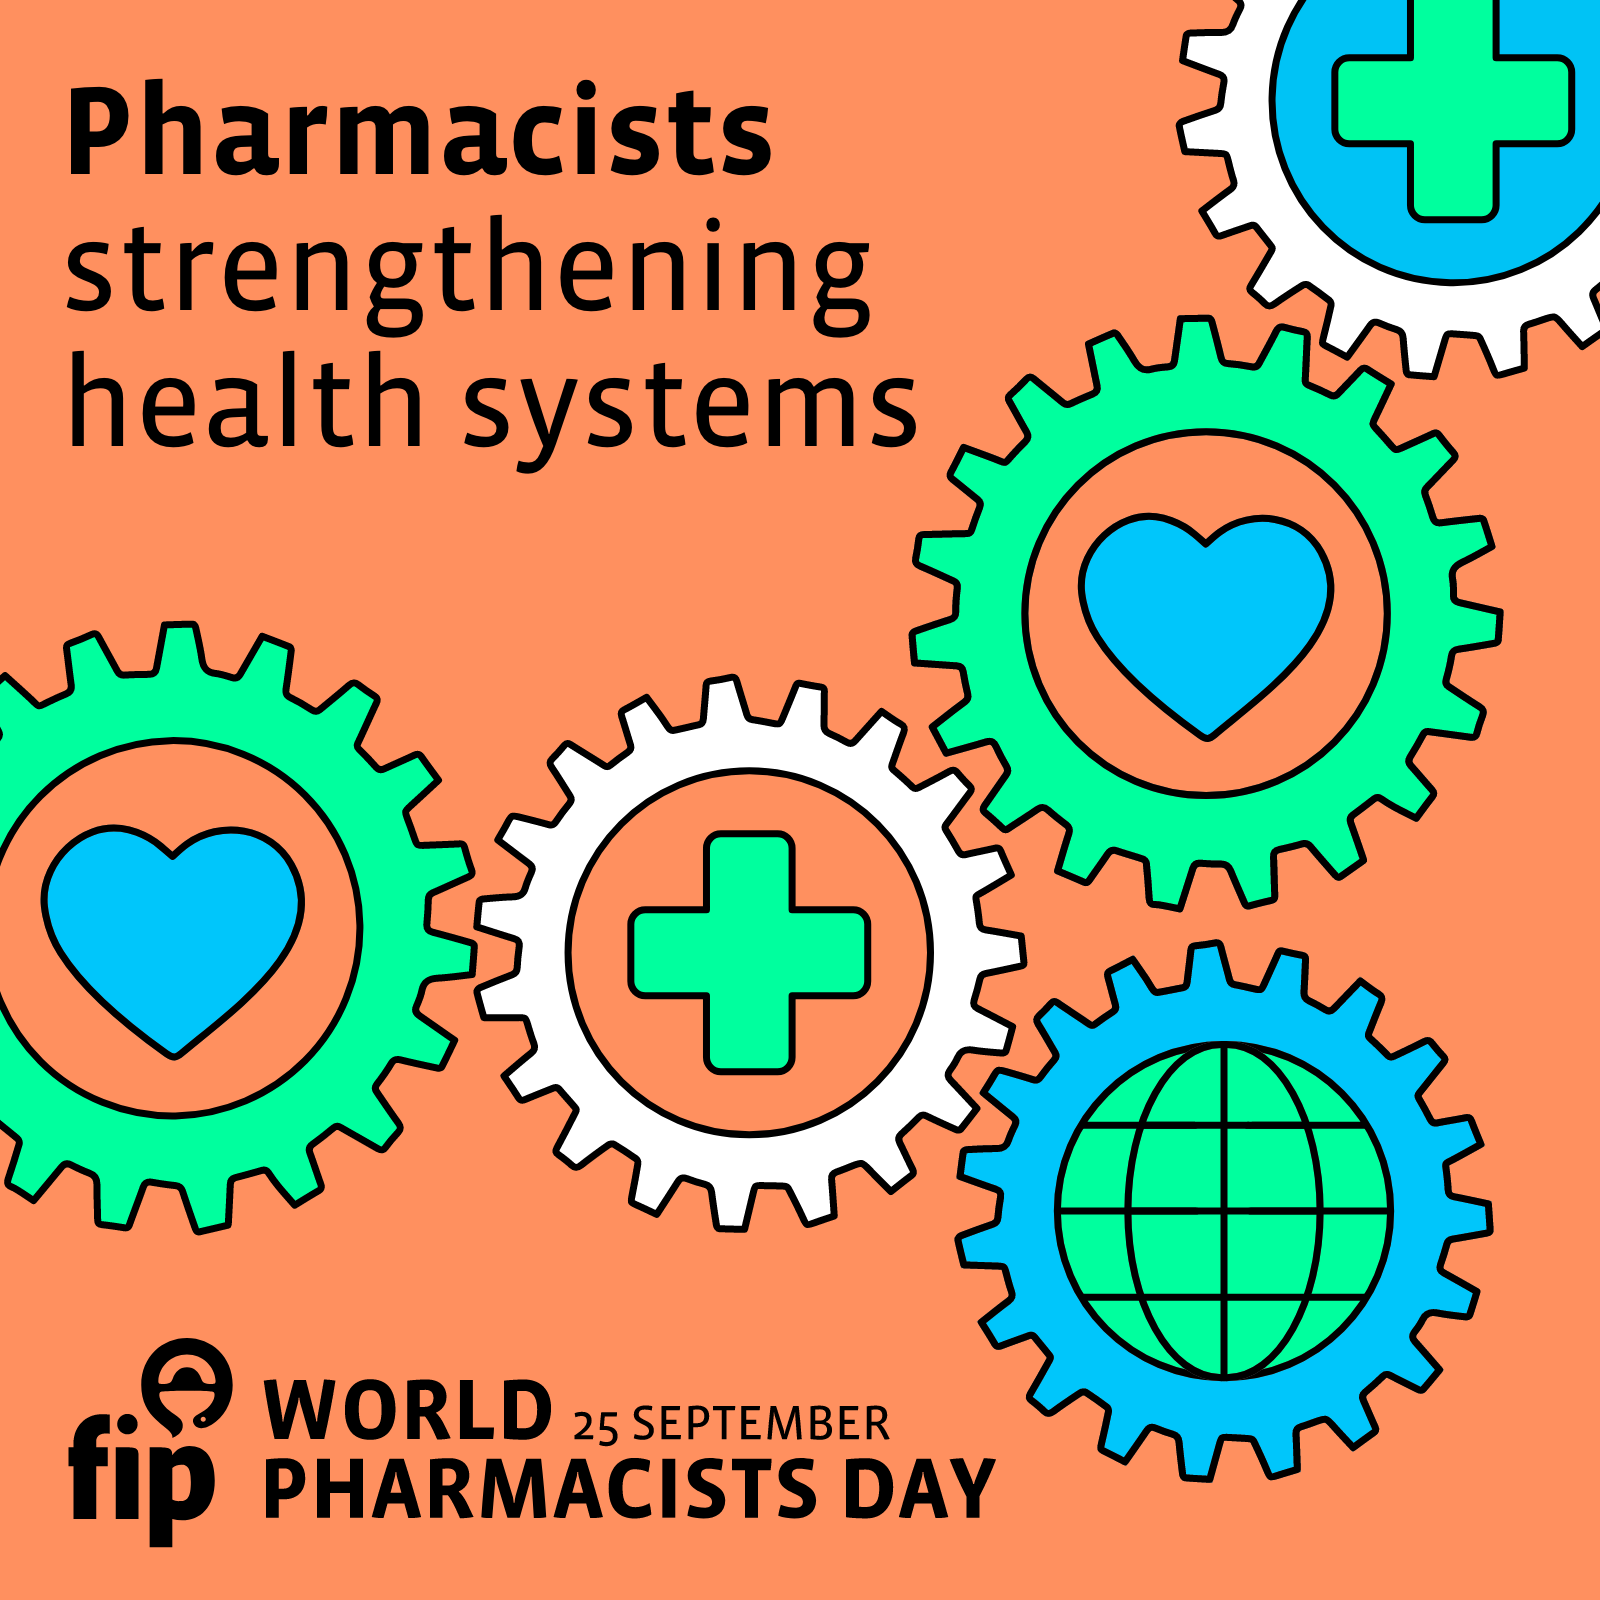 World Pharmacists Day FIP International Pharmaceutical Federation